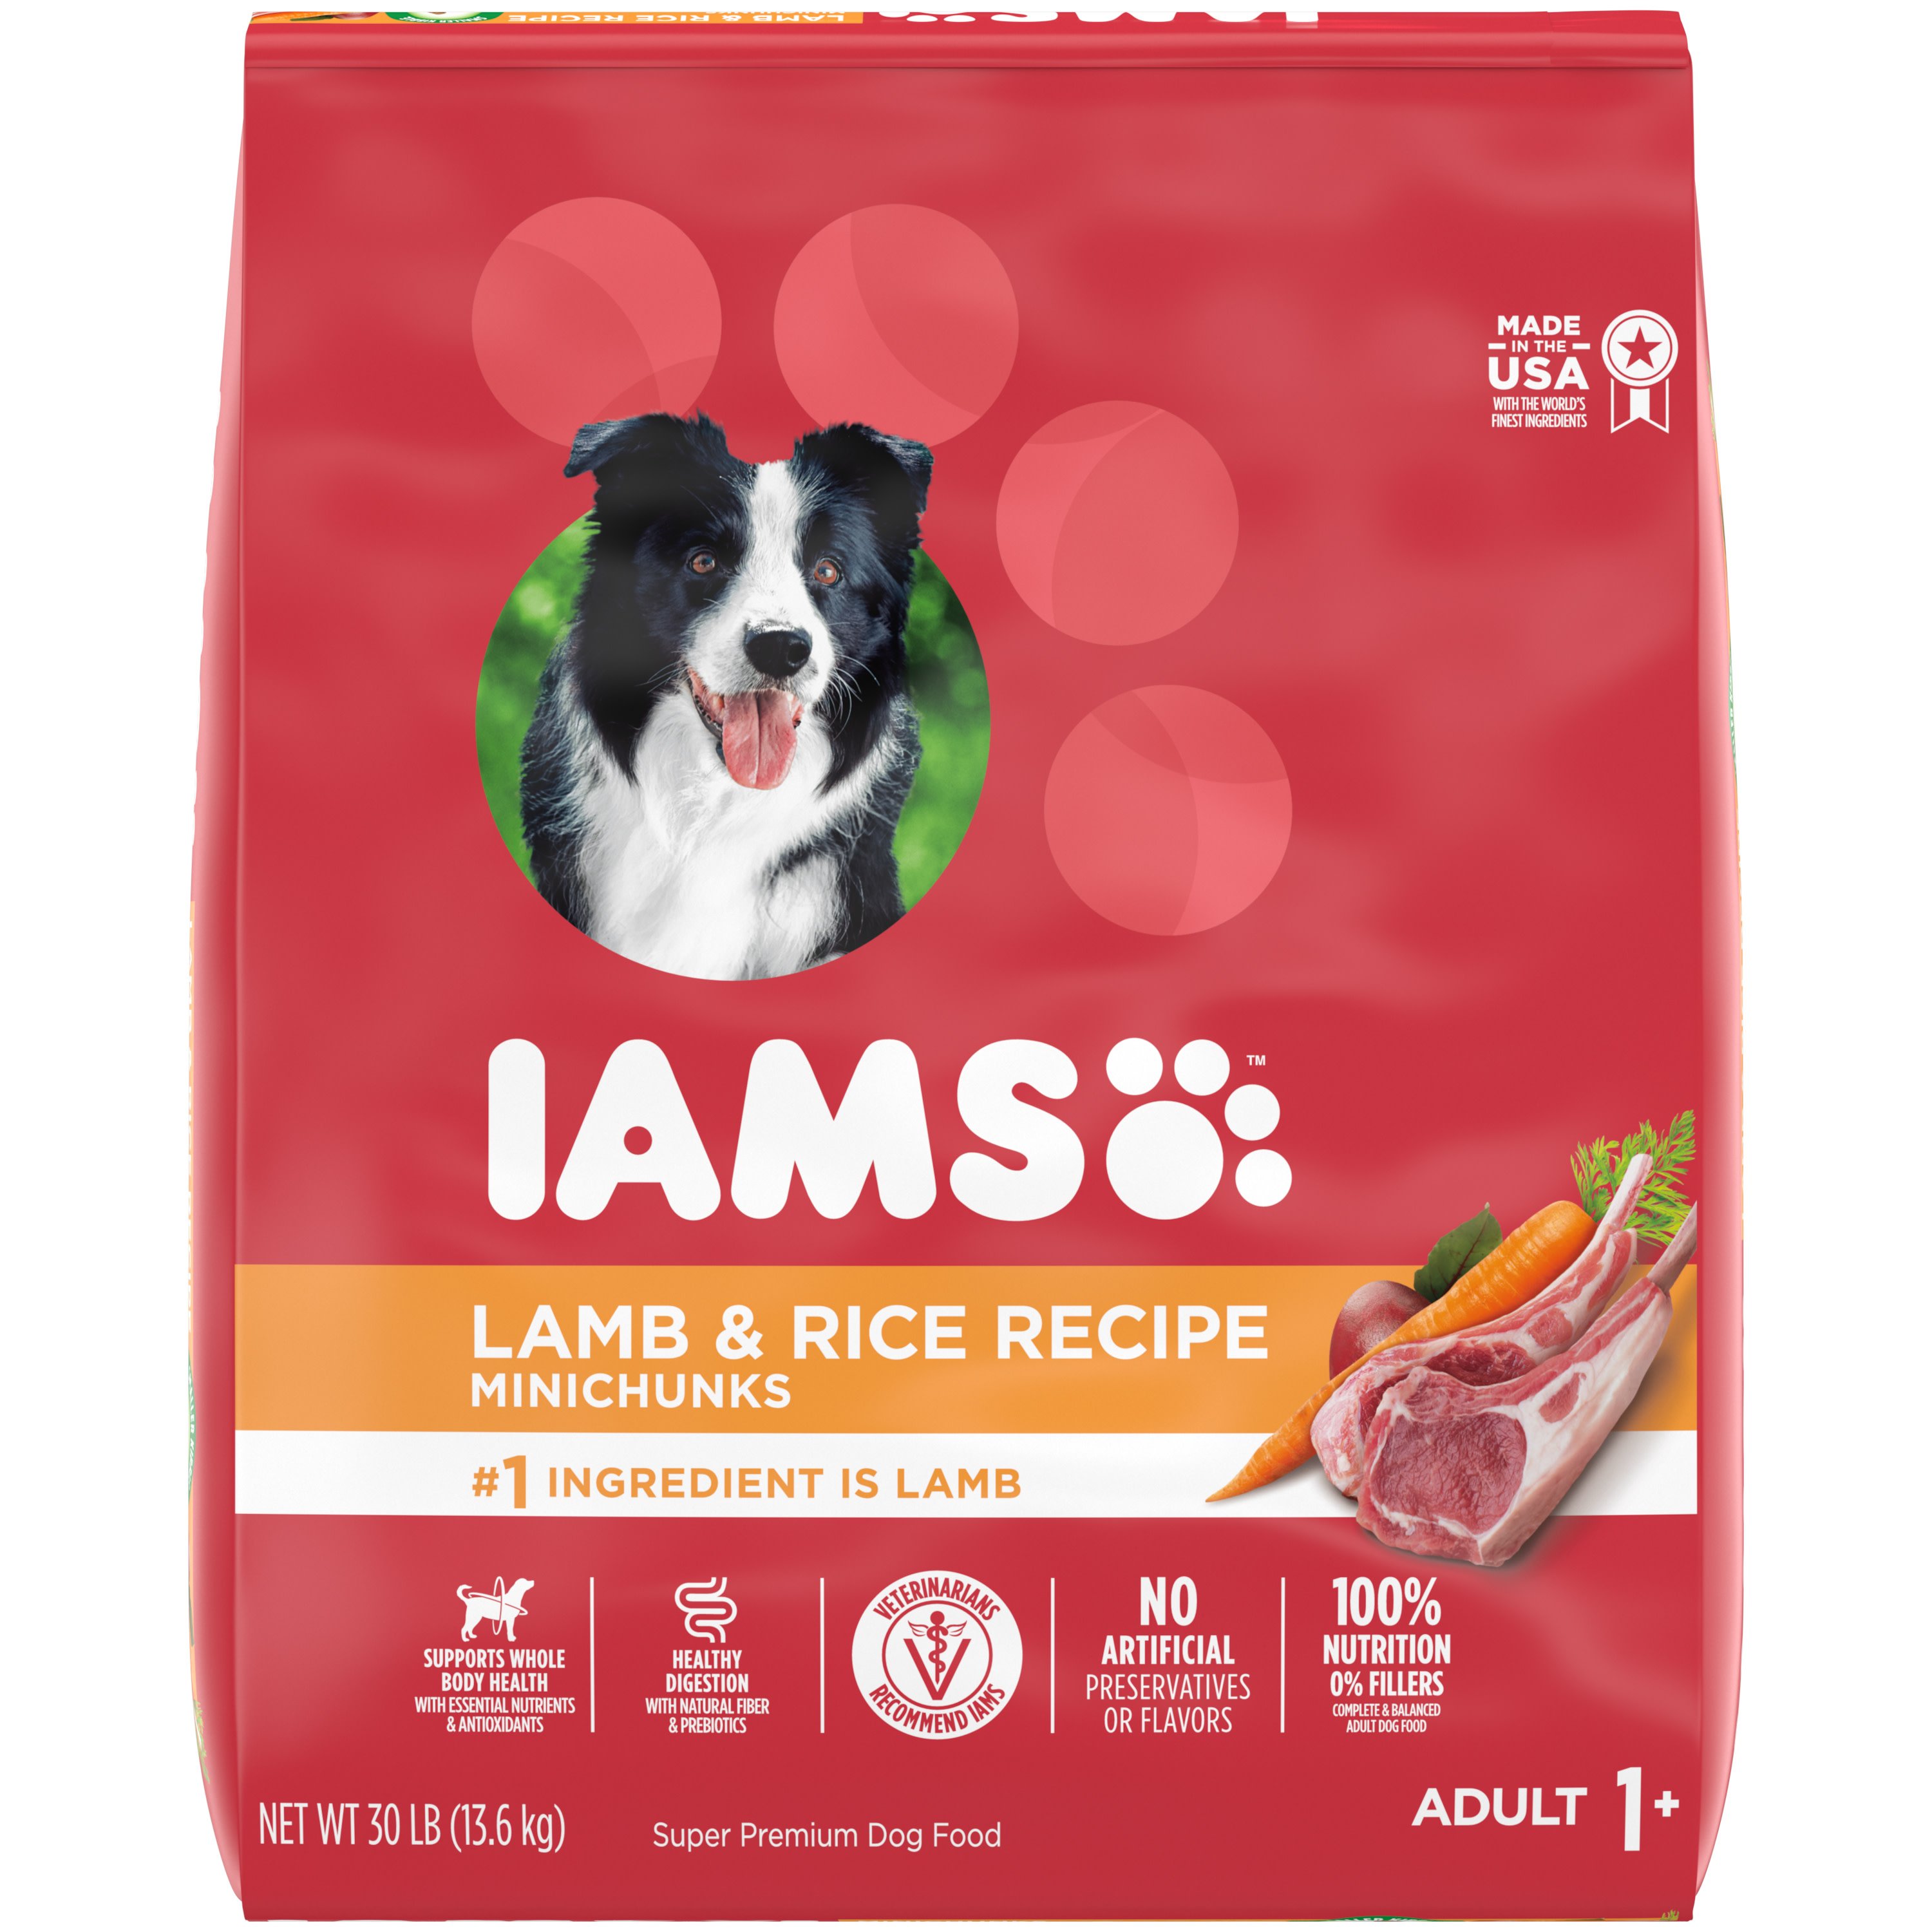 how long does iams dog food last